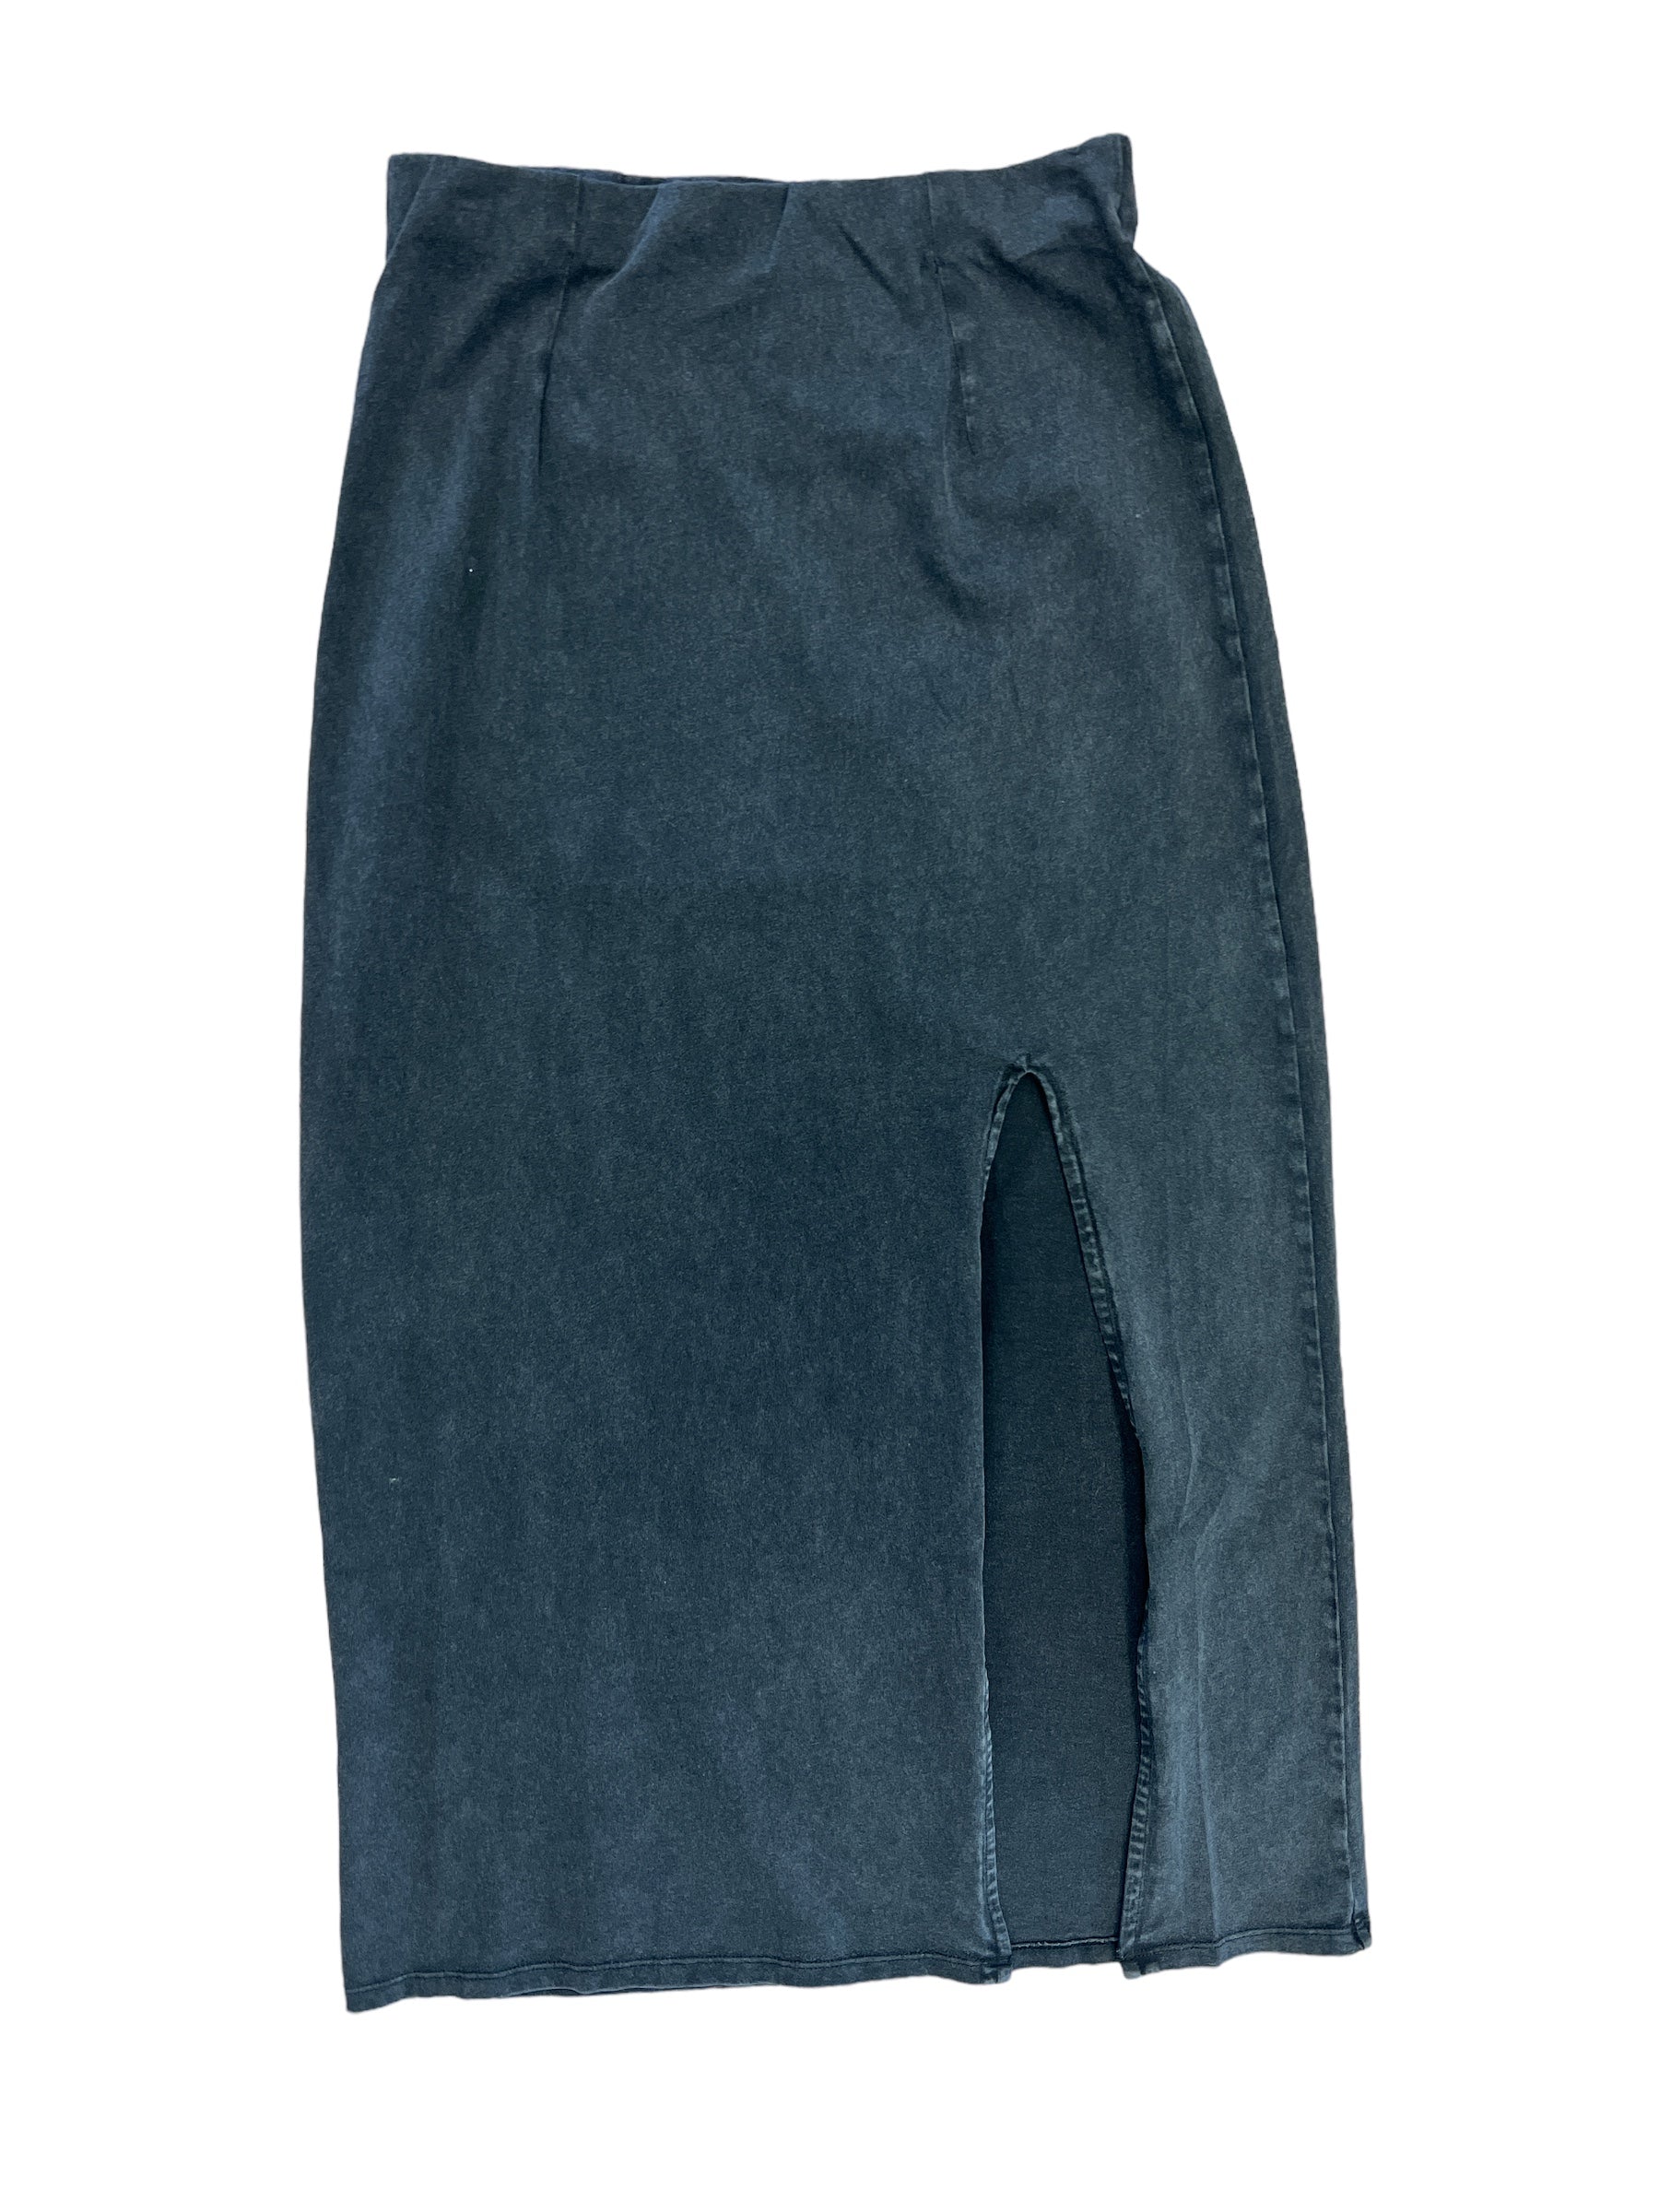 Shilo Knit Skirt-220 Skirts/Shorts-Simply Stylish Boutique-Simply Stylish Boutique | Women’s & Kid’s Fashion | Paducah, KY